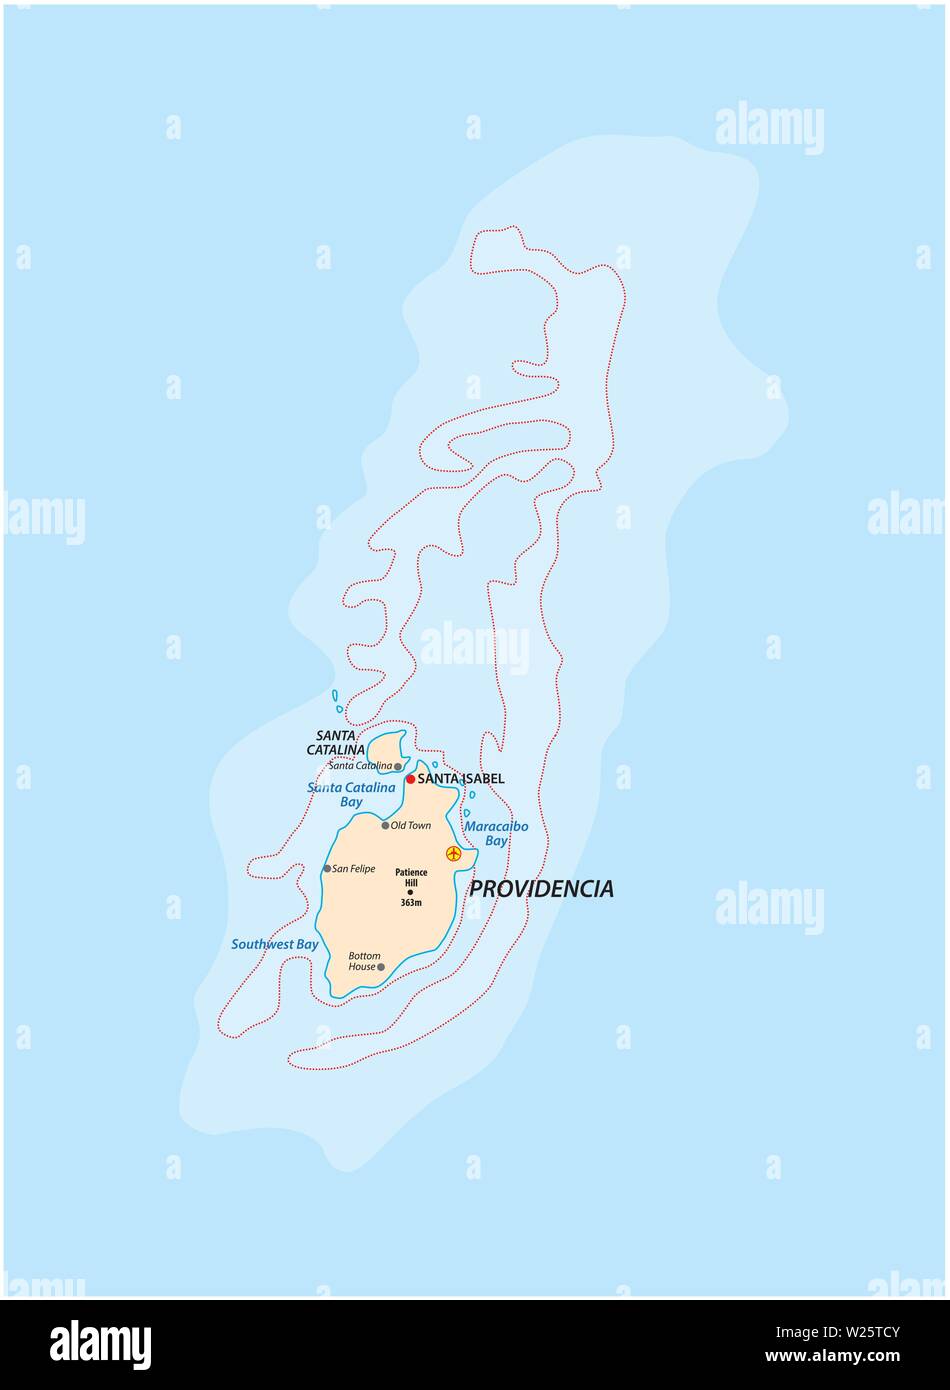 Small Outline Karte der kolumbianischen Karibik Inseln Providencia und Santa Catalina Stock Vektor